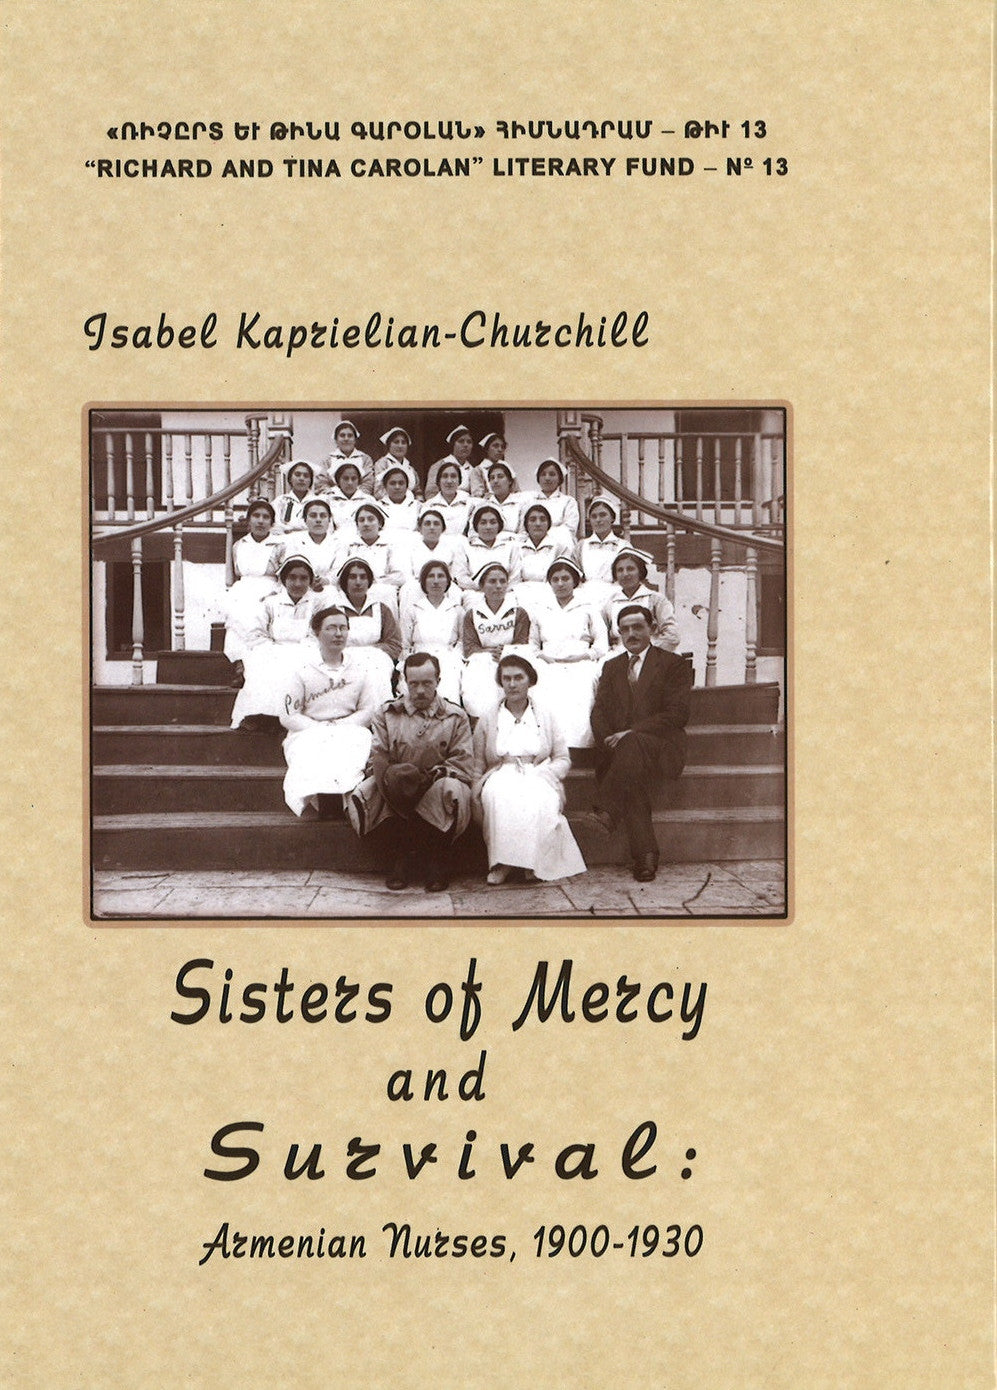 SISTERS OF MERCY AND SURVIVAL: Armenian Nurses, 1900-1930